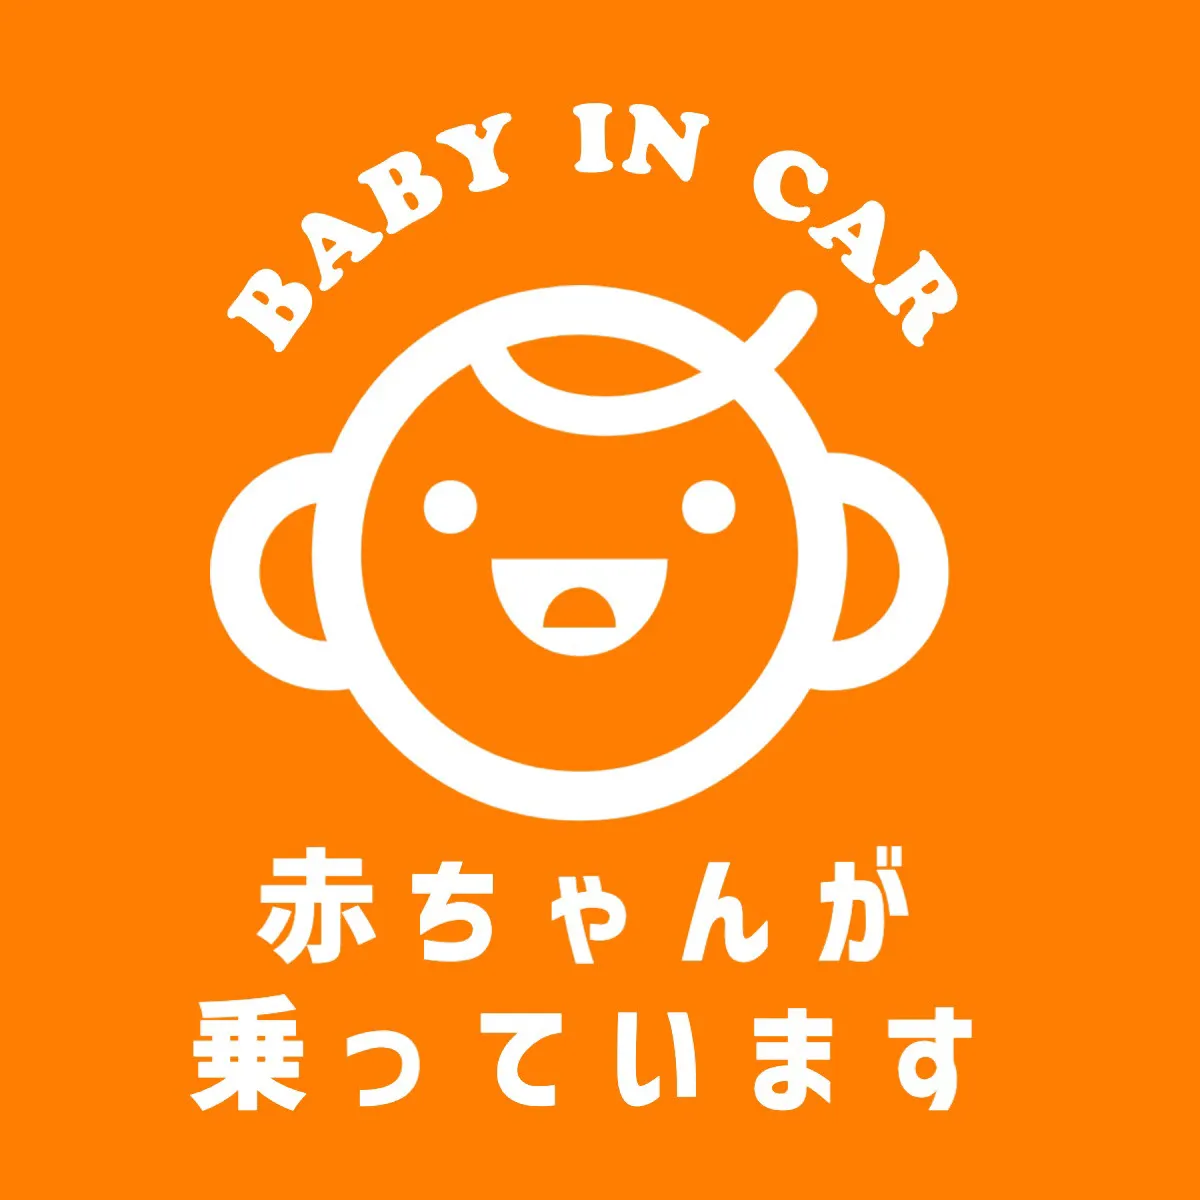 Baby in car cute logo